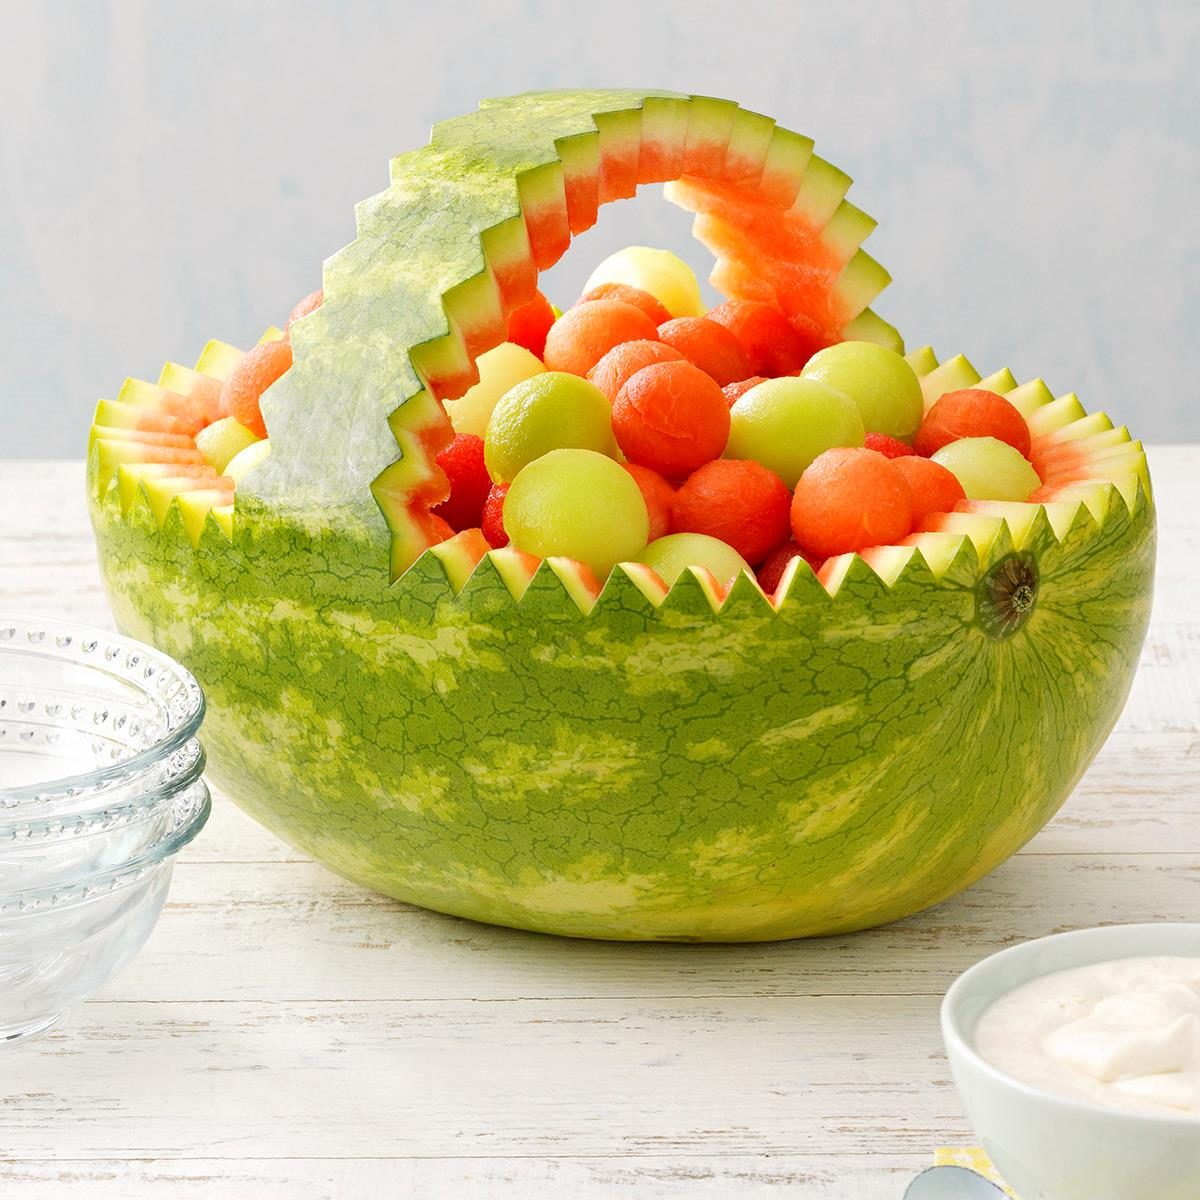 carved watermelon basket